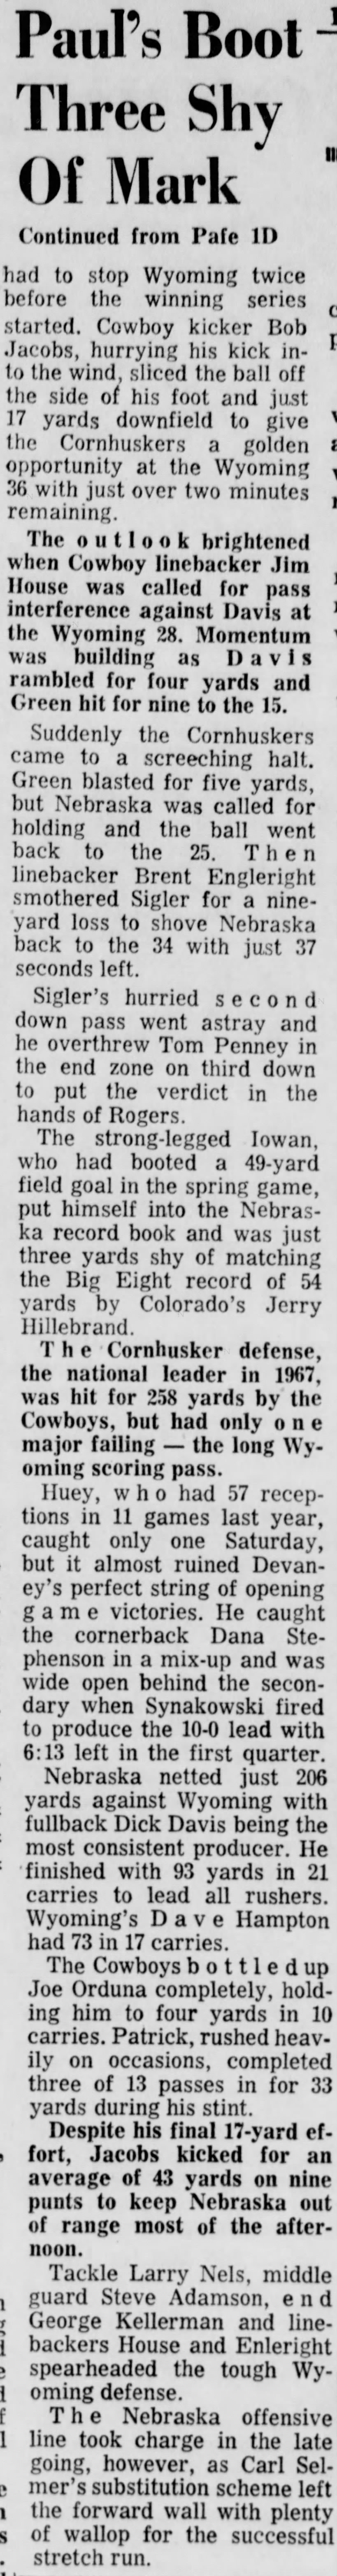 1968 Nebraska-Wyoming football LJS2